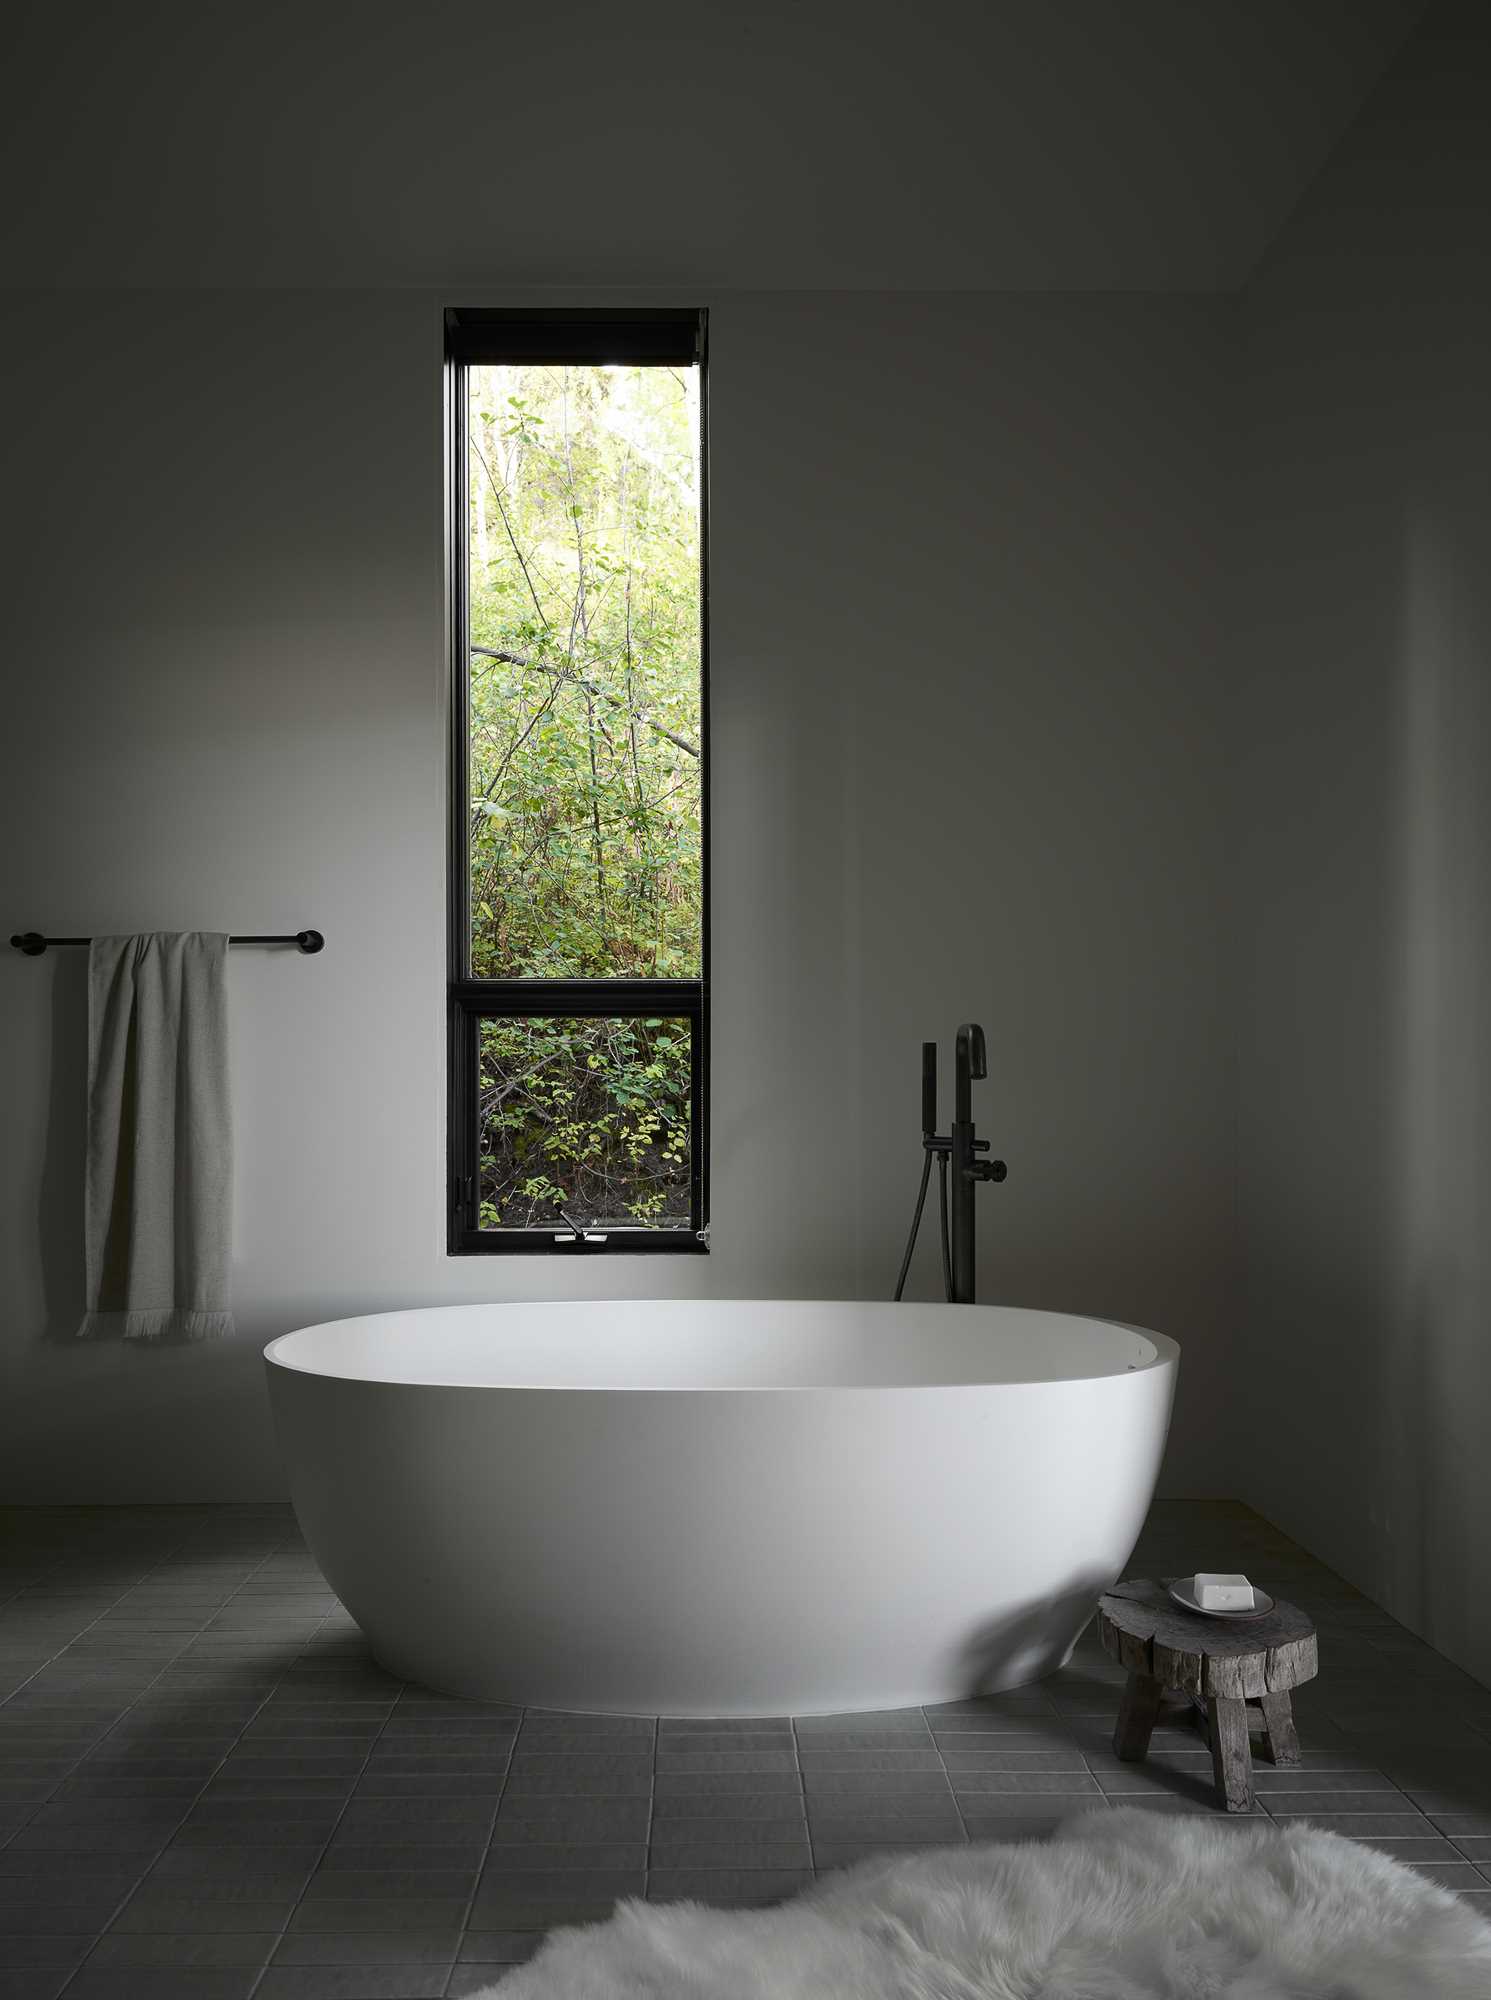 A modern bathroom with a freestanding bathtub and thin vertical window.